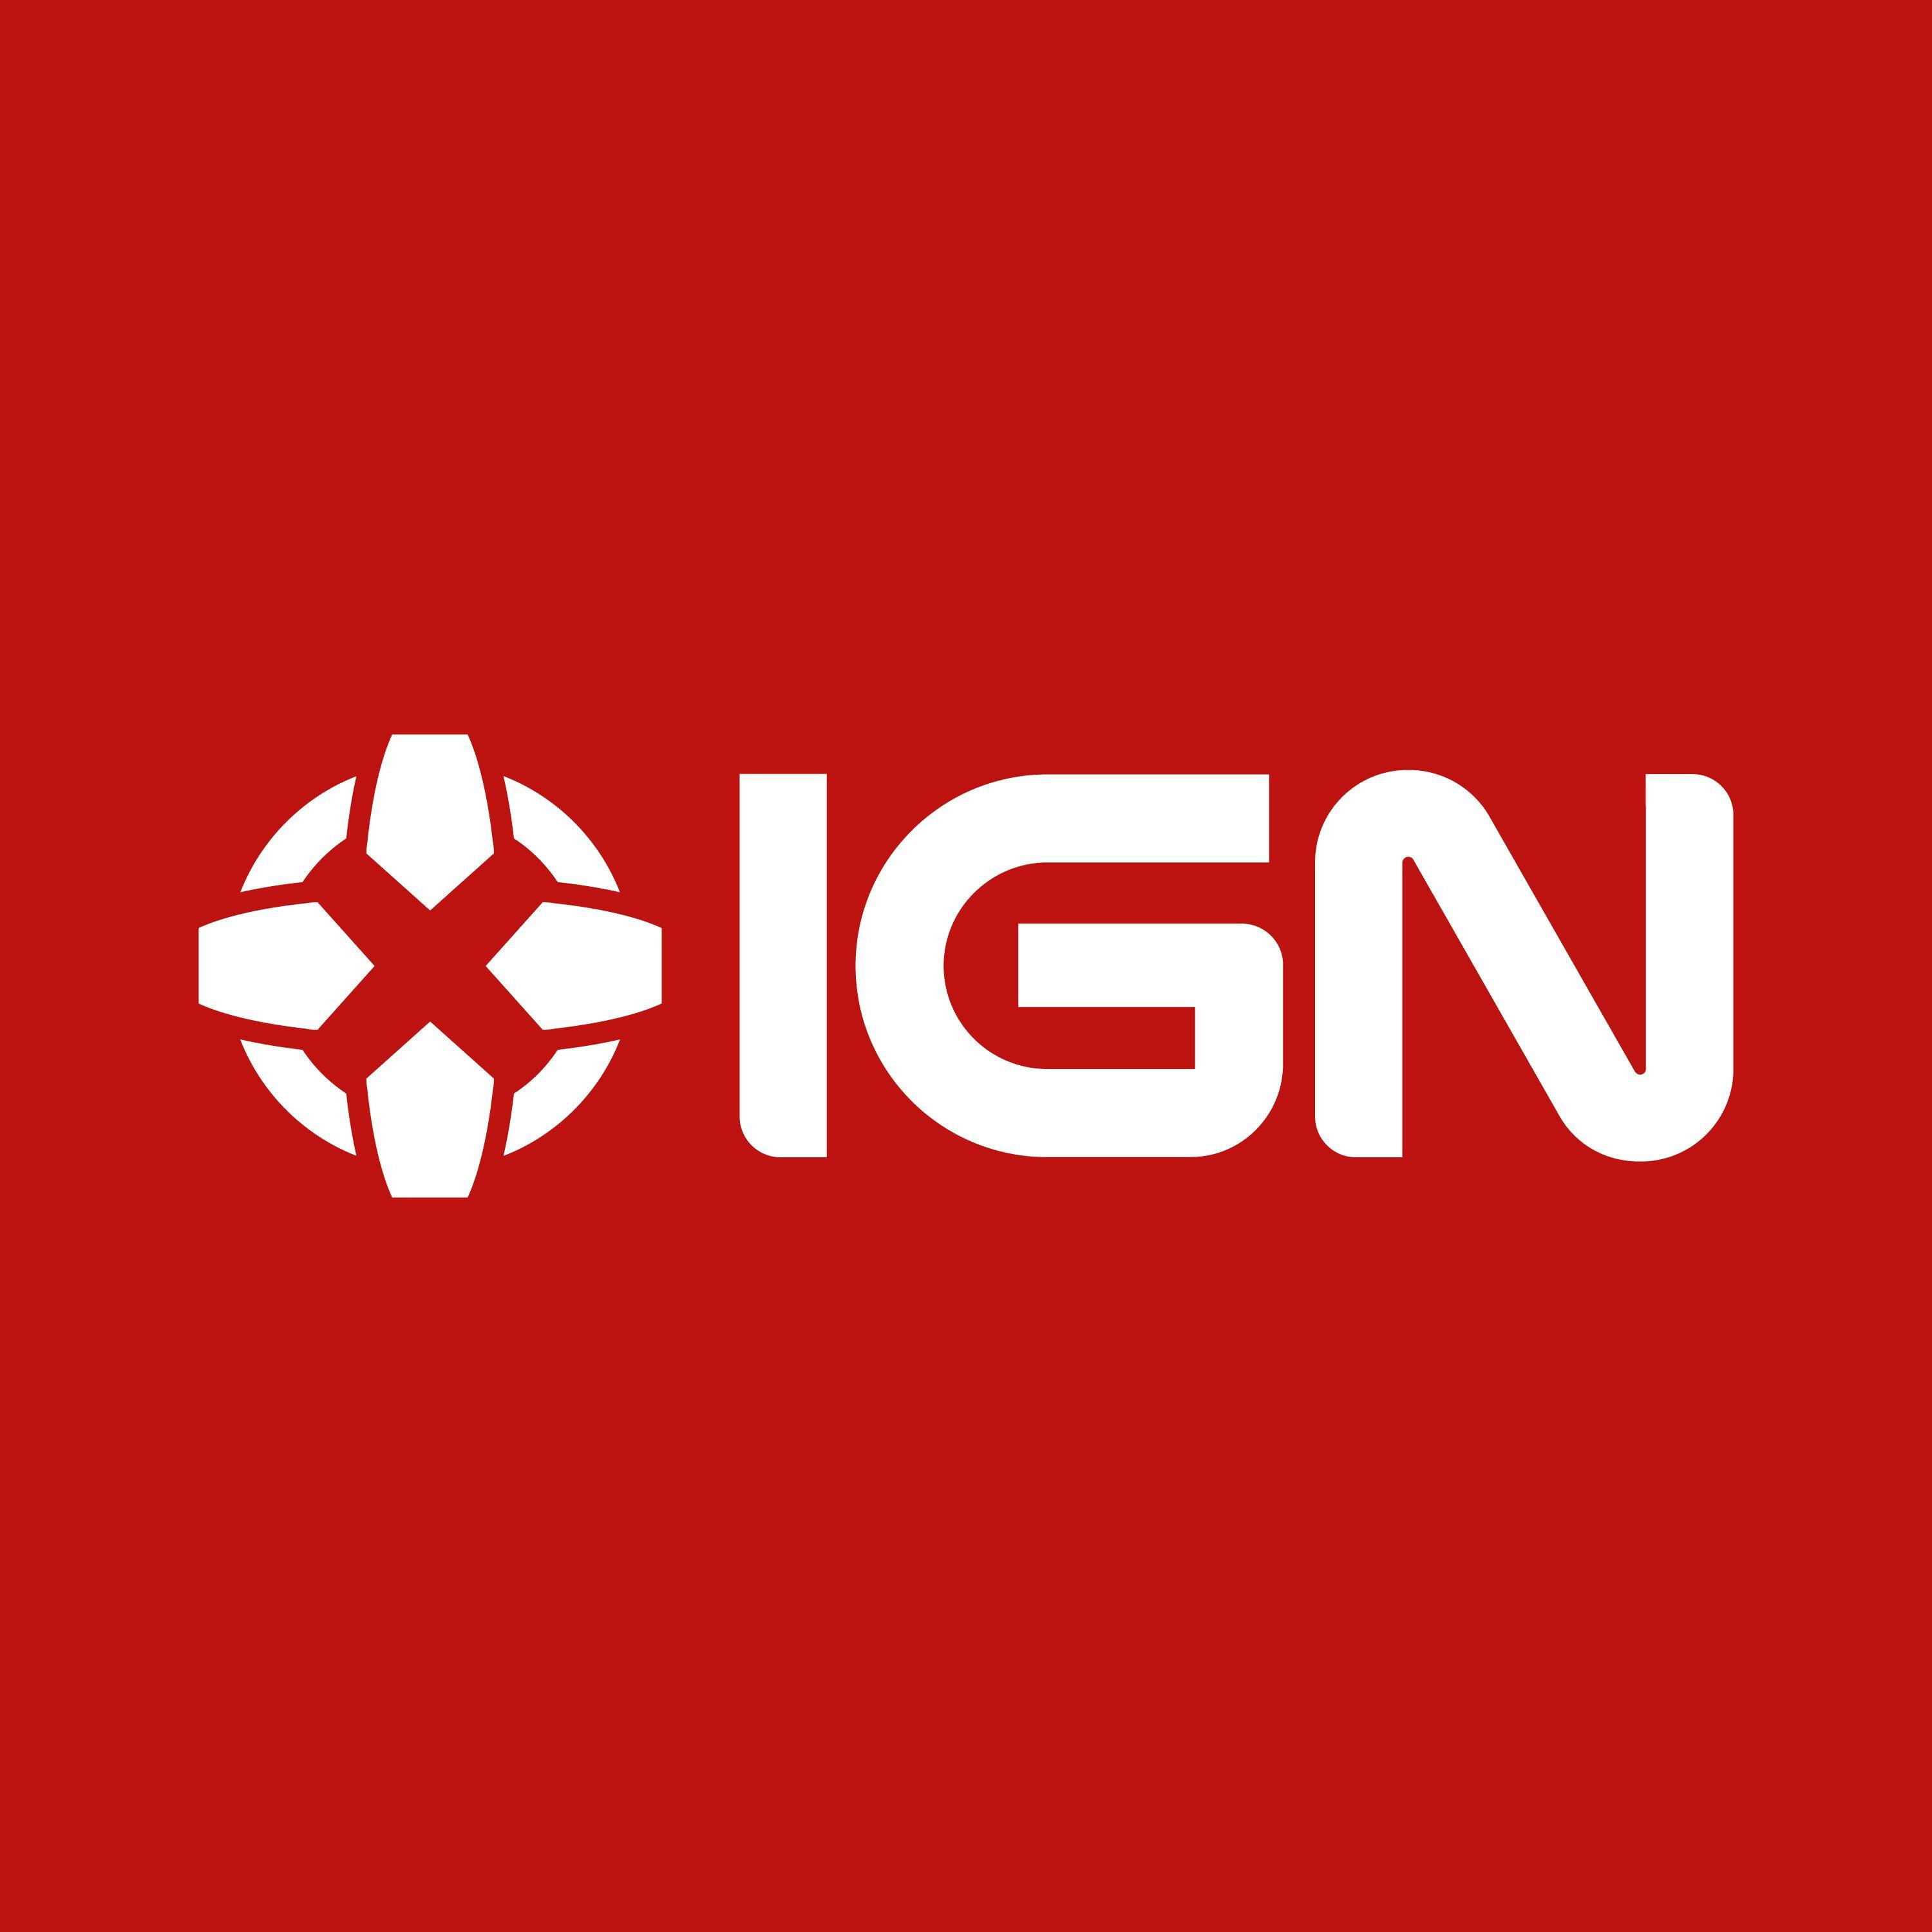 Eastward Review - IGN